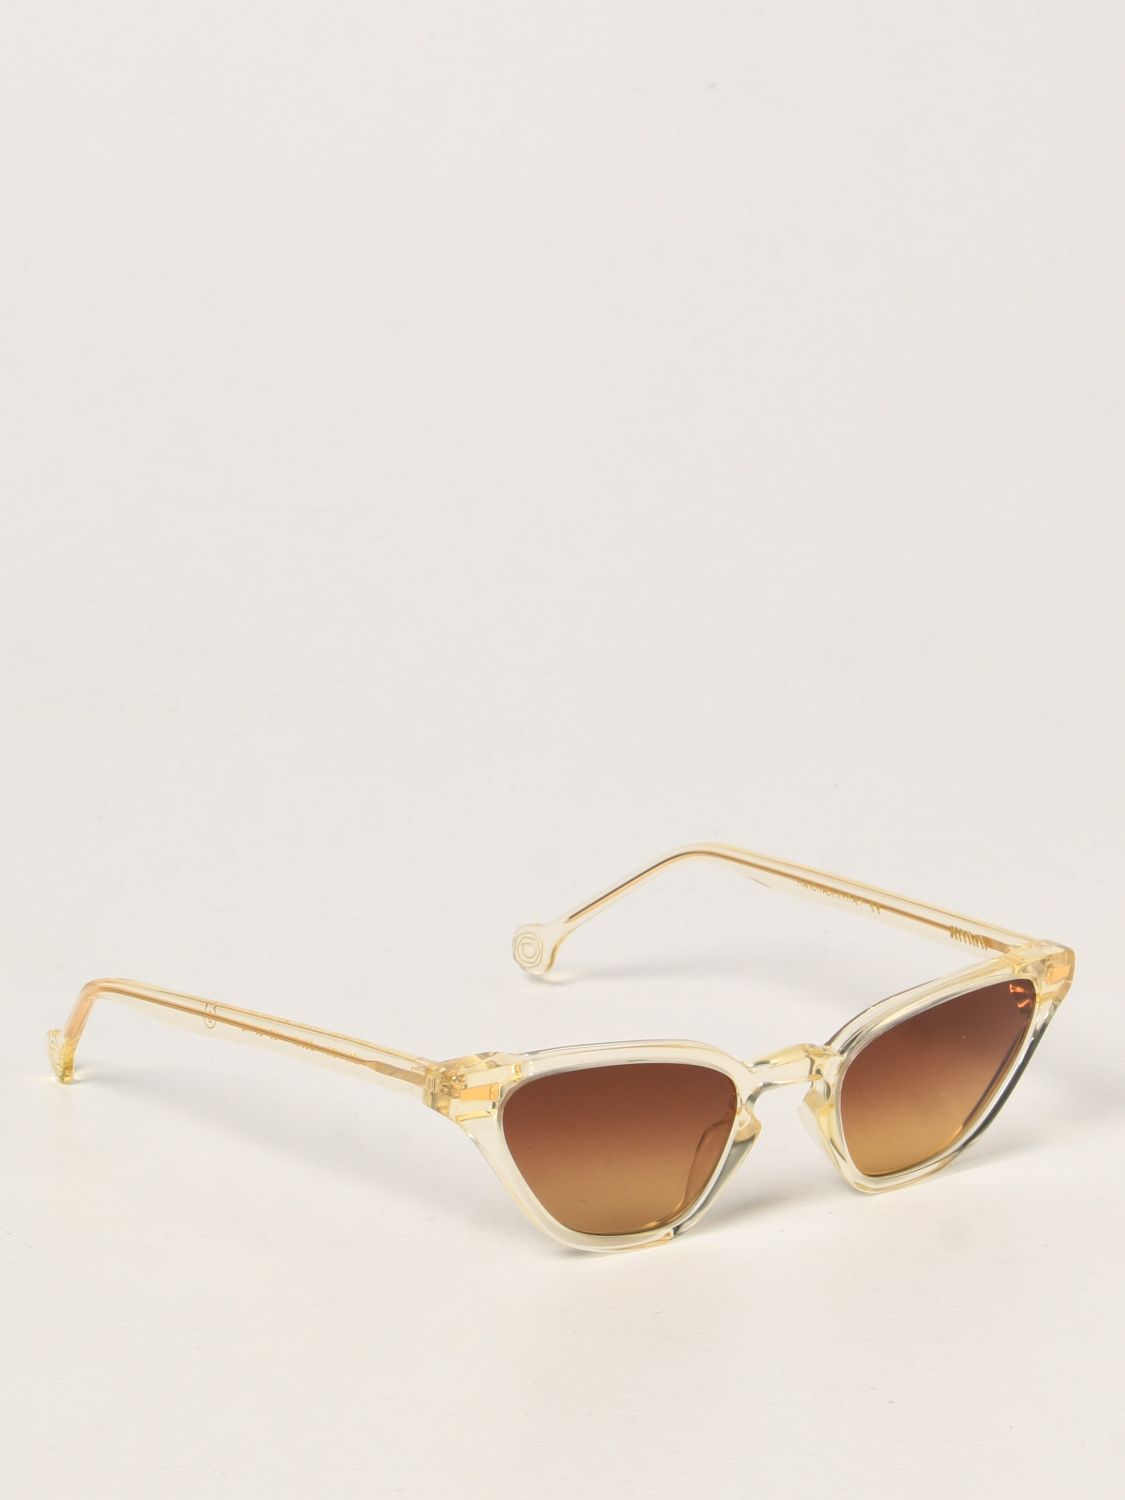 Glasses Kyme: Alessandra Kyme sunglasses yellow 1